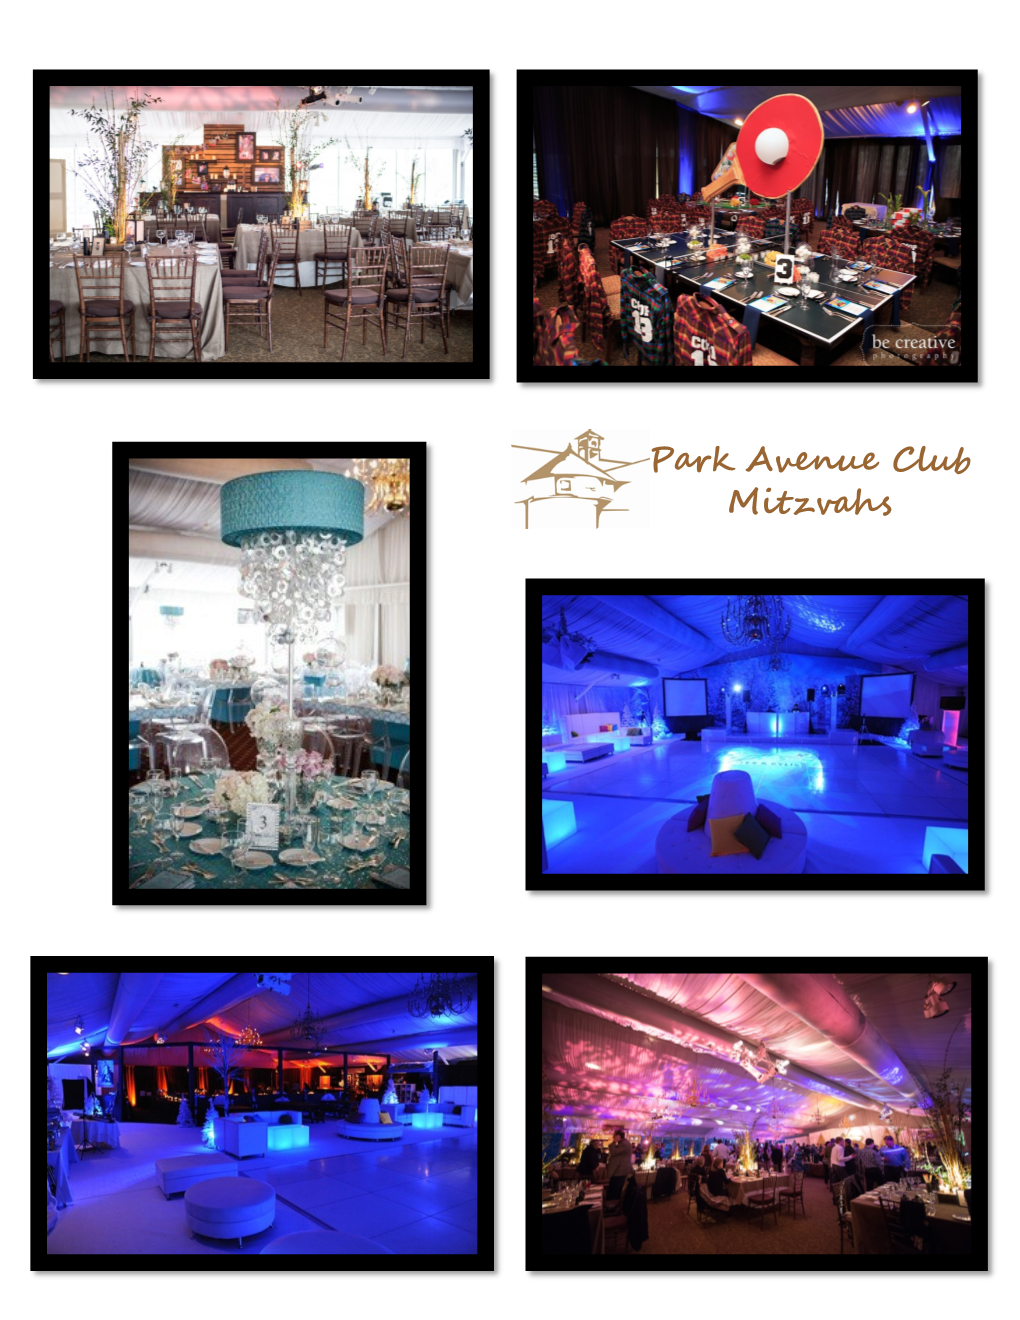 Park Avenue Club Mitzvahs Park Avenue Club Exclusivity ~ Exquisite Service ~ Exceptional Cuisine